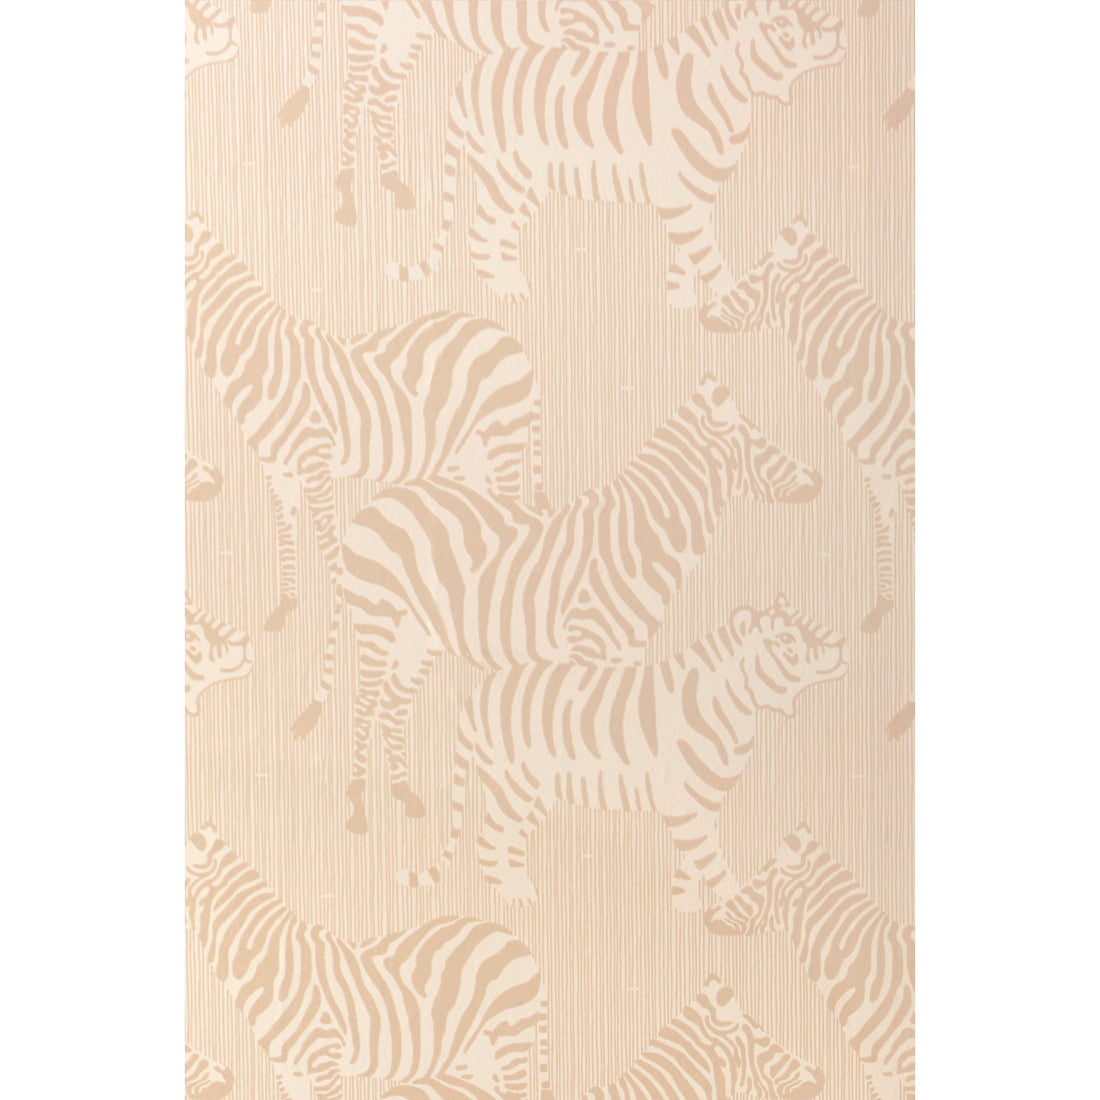 majvillan-wallpaper-safari-stripes-dusty-beige-majv-141-02- (1)